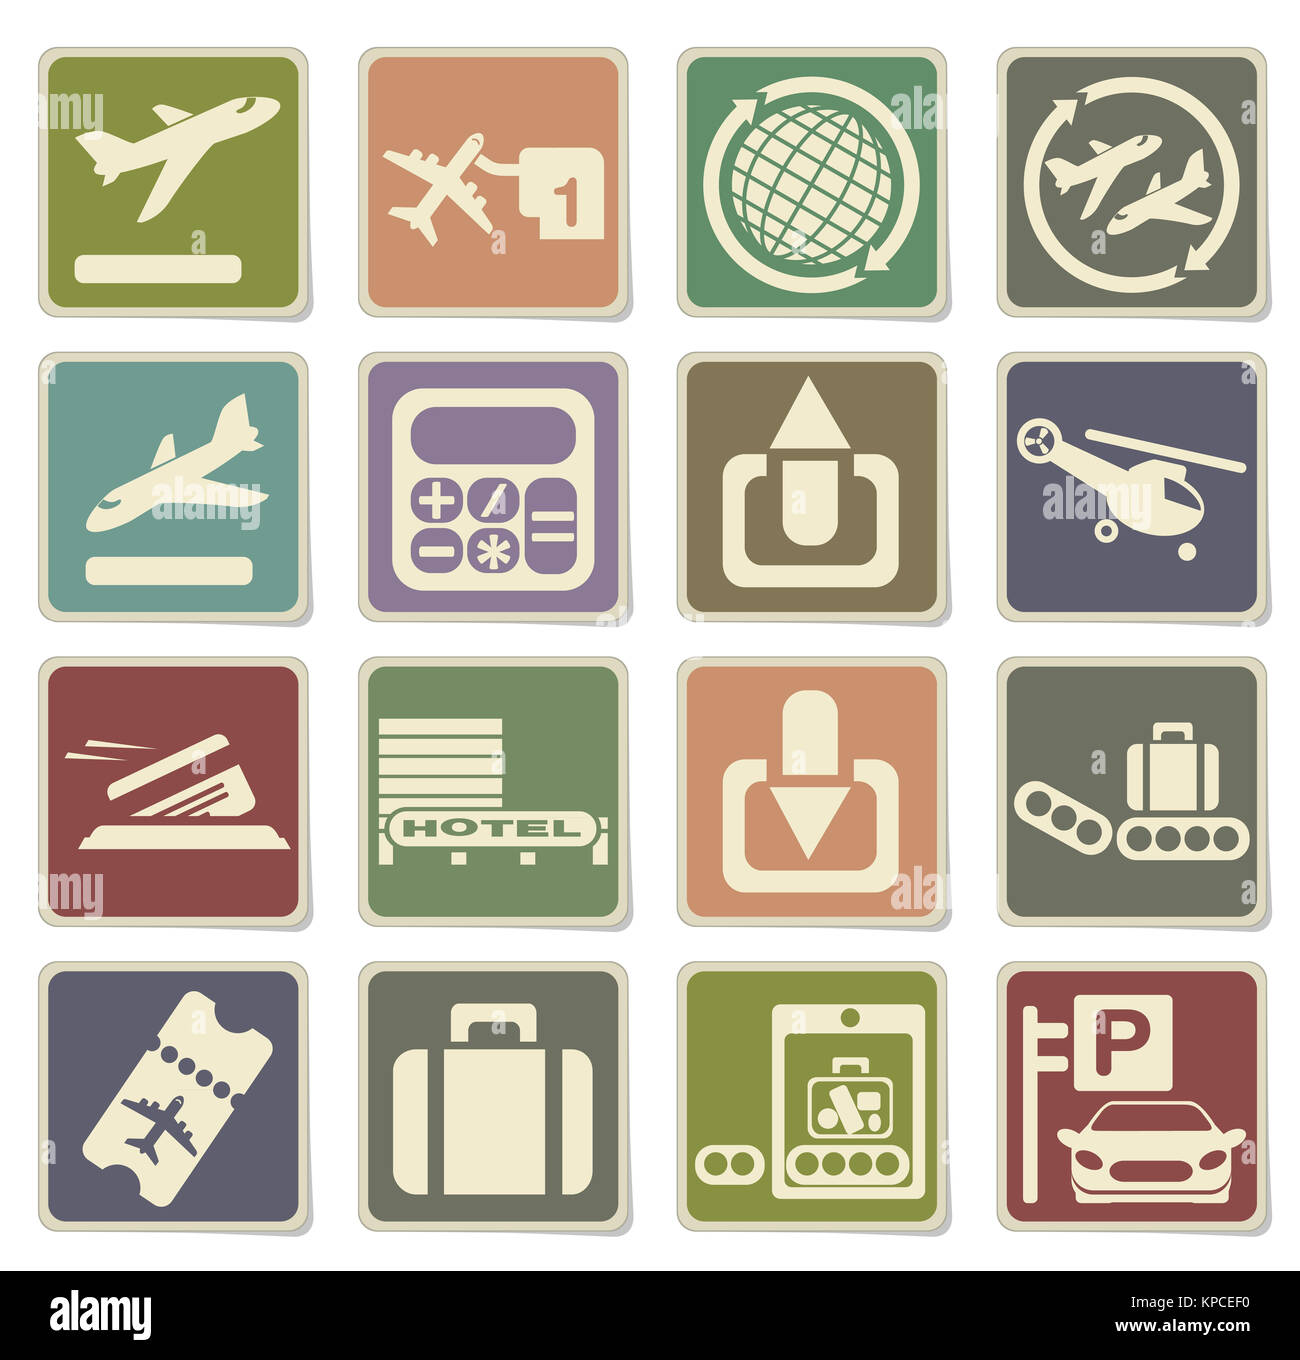 Airport icons set Stock Photo